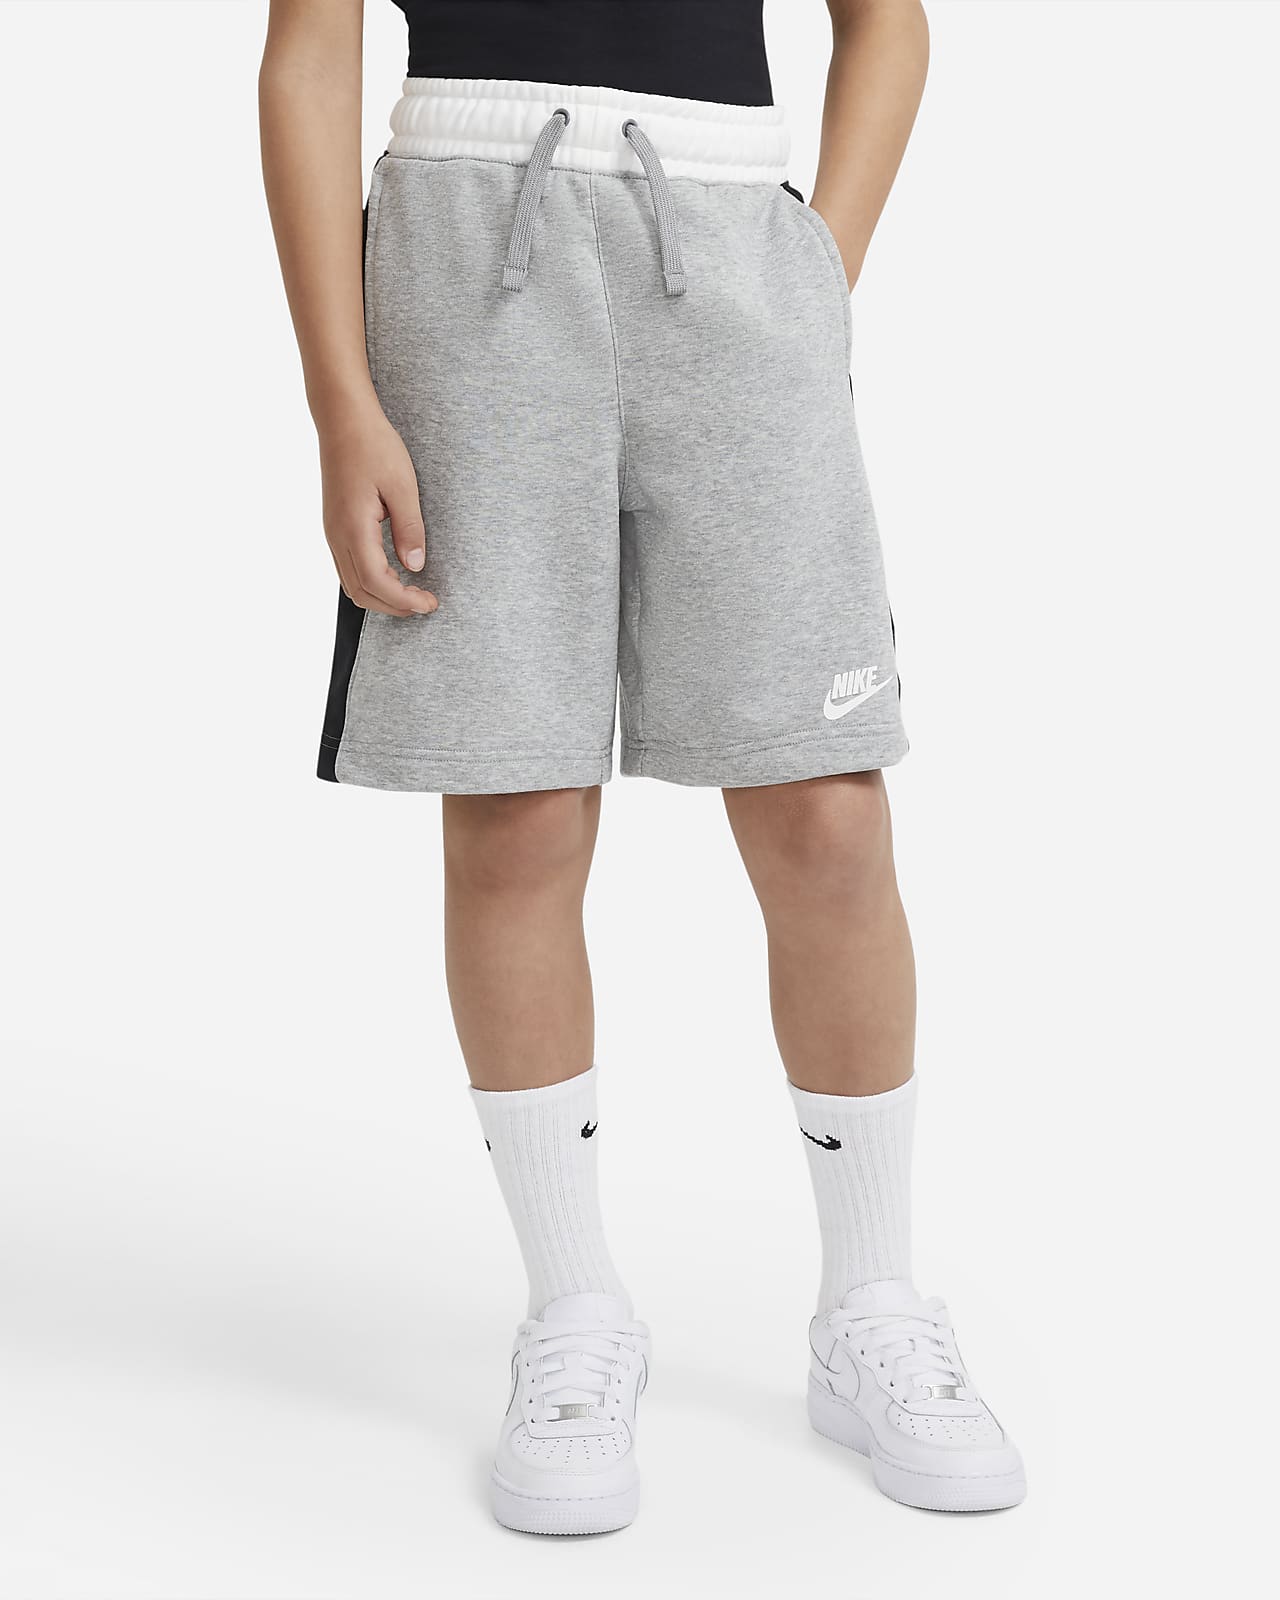 nike grey shorts boys